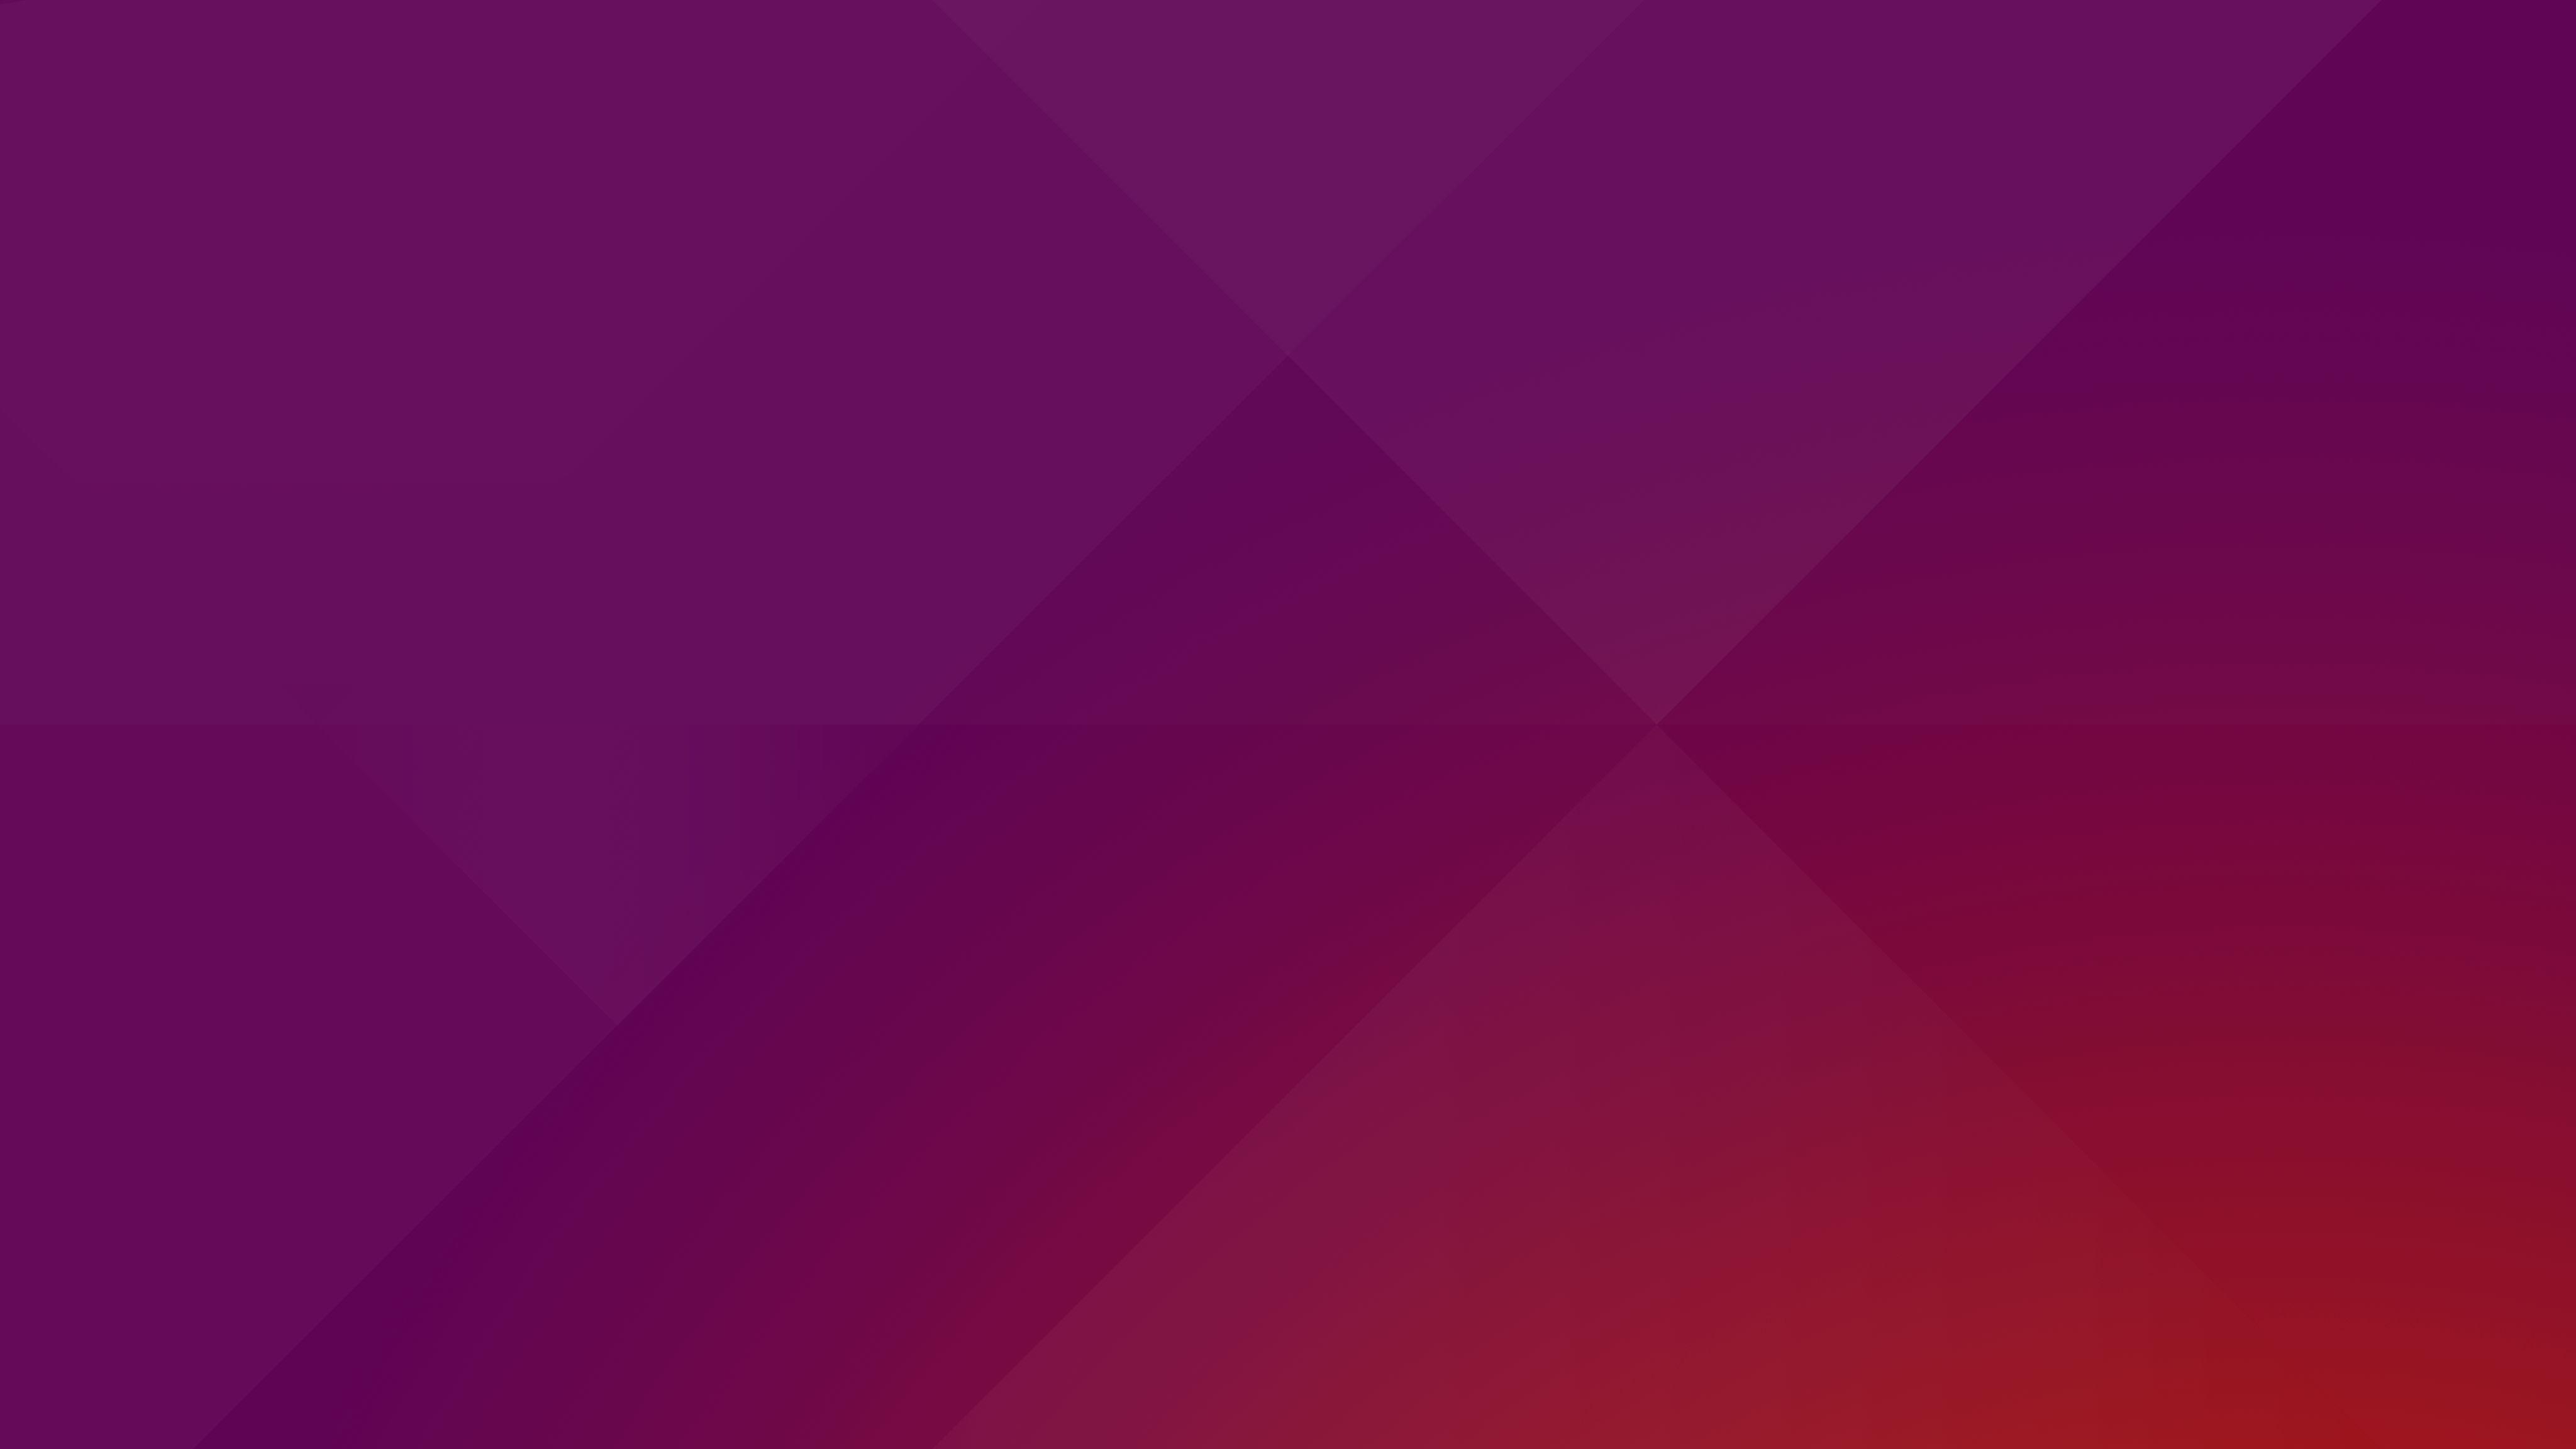 4096 x 2304 · jpeg - Ubuntu 16.04 LTS: Default Desktop Wallpaper Unveiled | UbuntuHandbook